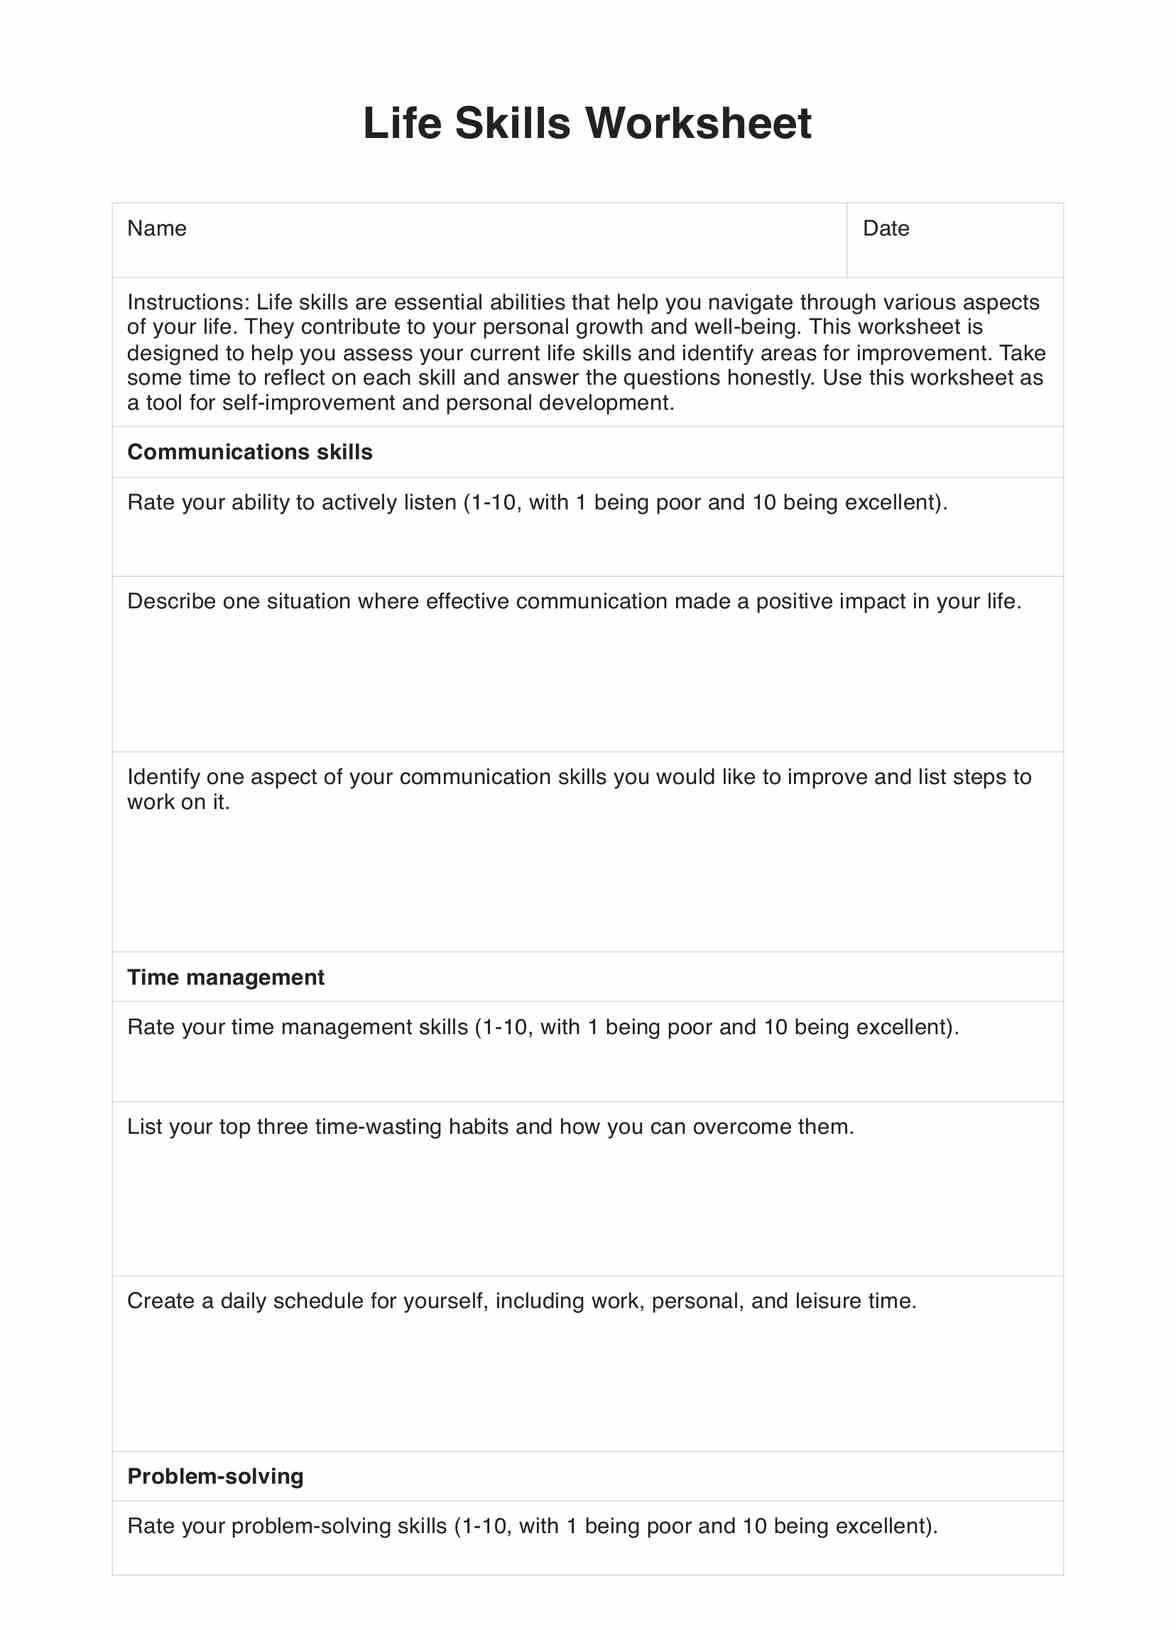 Life Skills Worksheets PDF Example